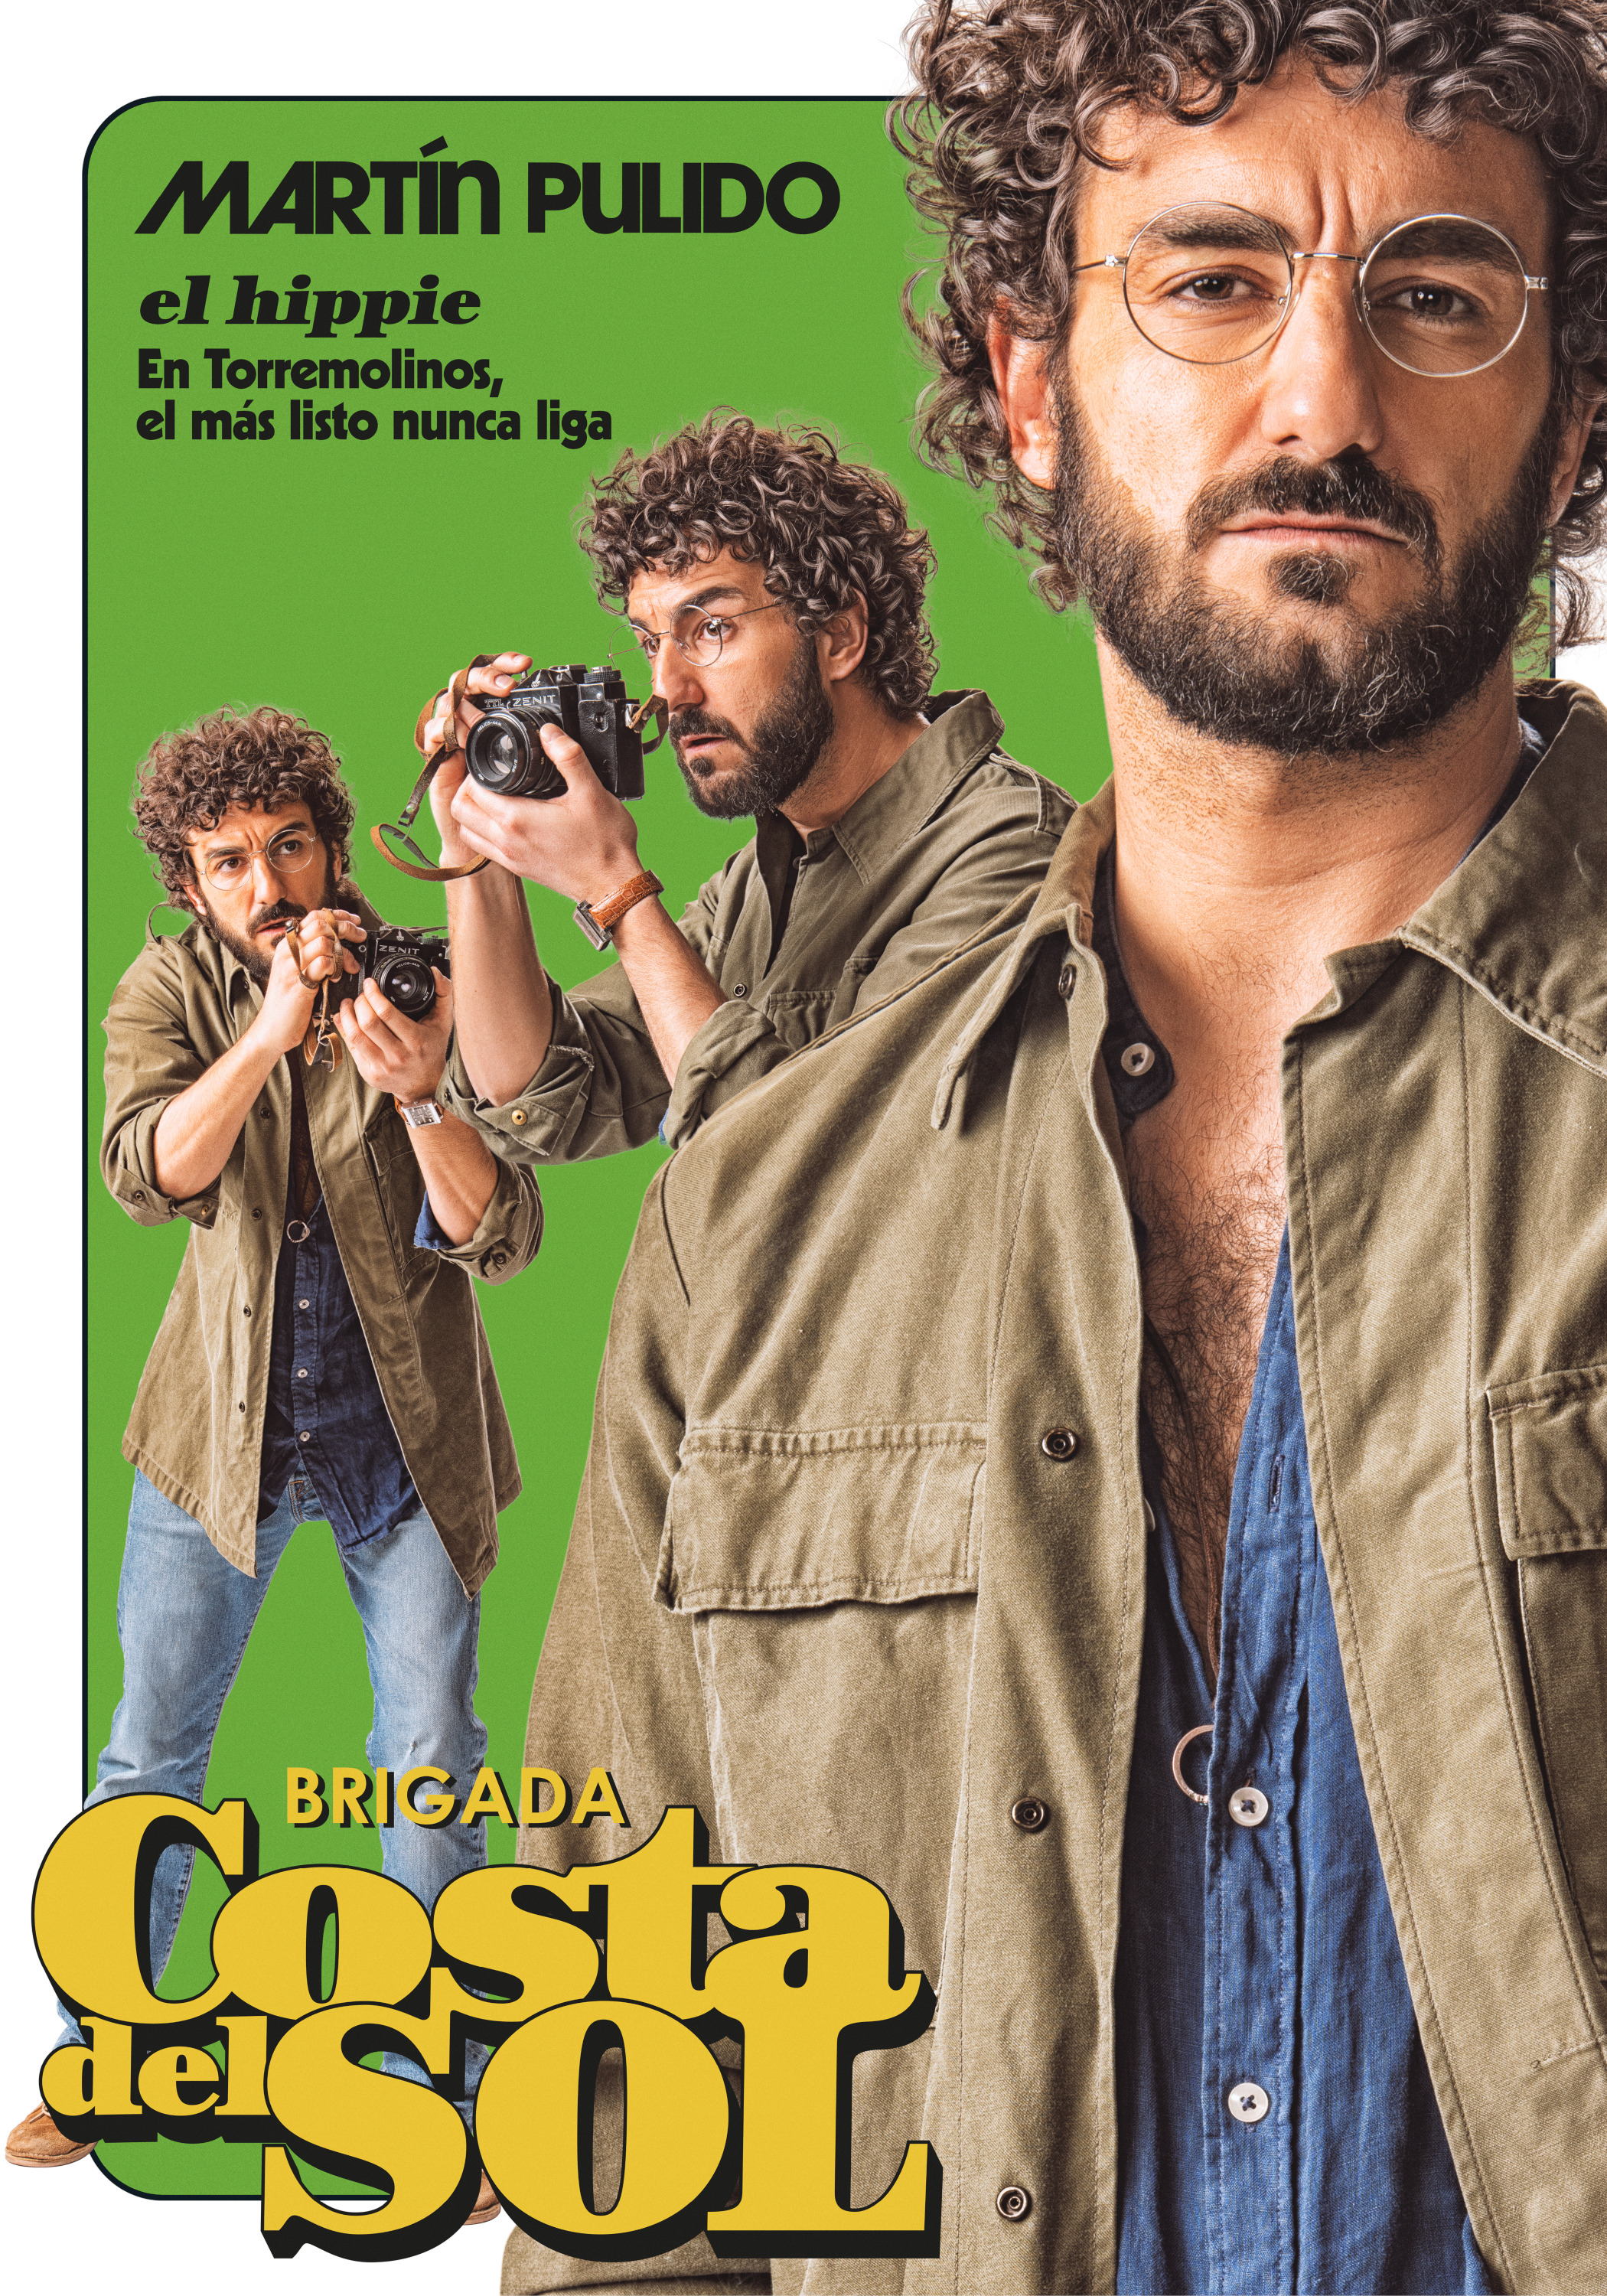 Mega Sized TV Poster Image for Brigada Costa del Sol (#6 of 23)